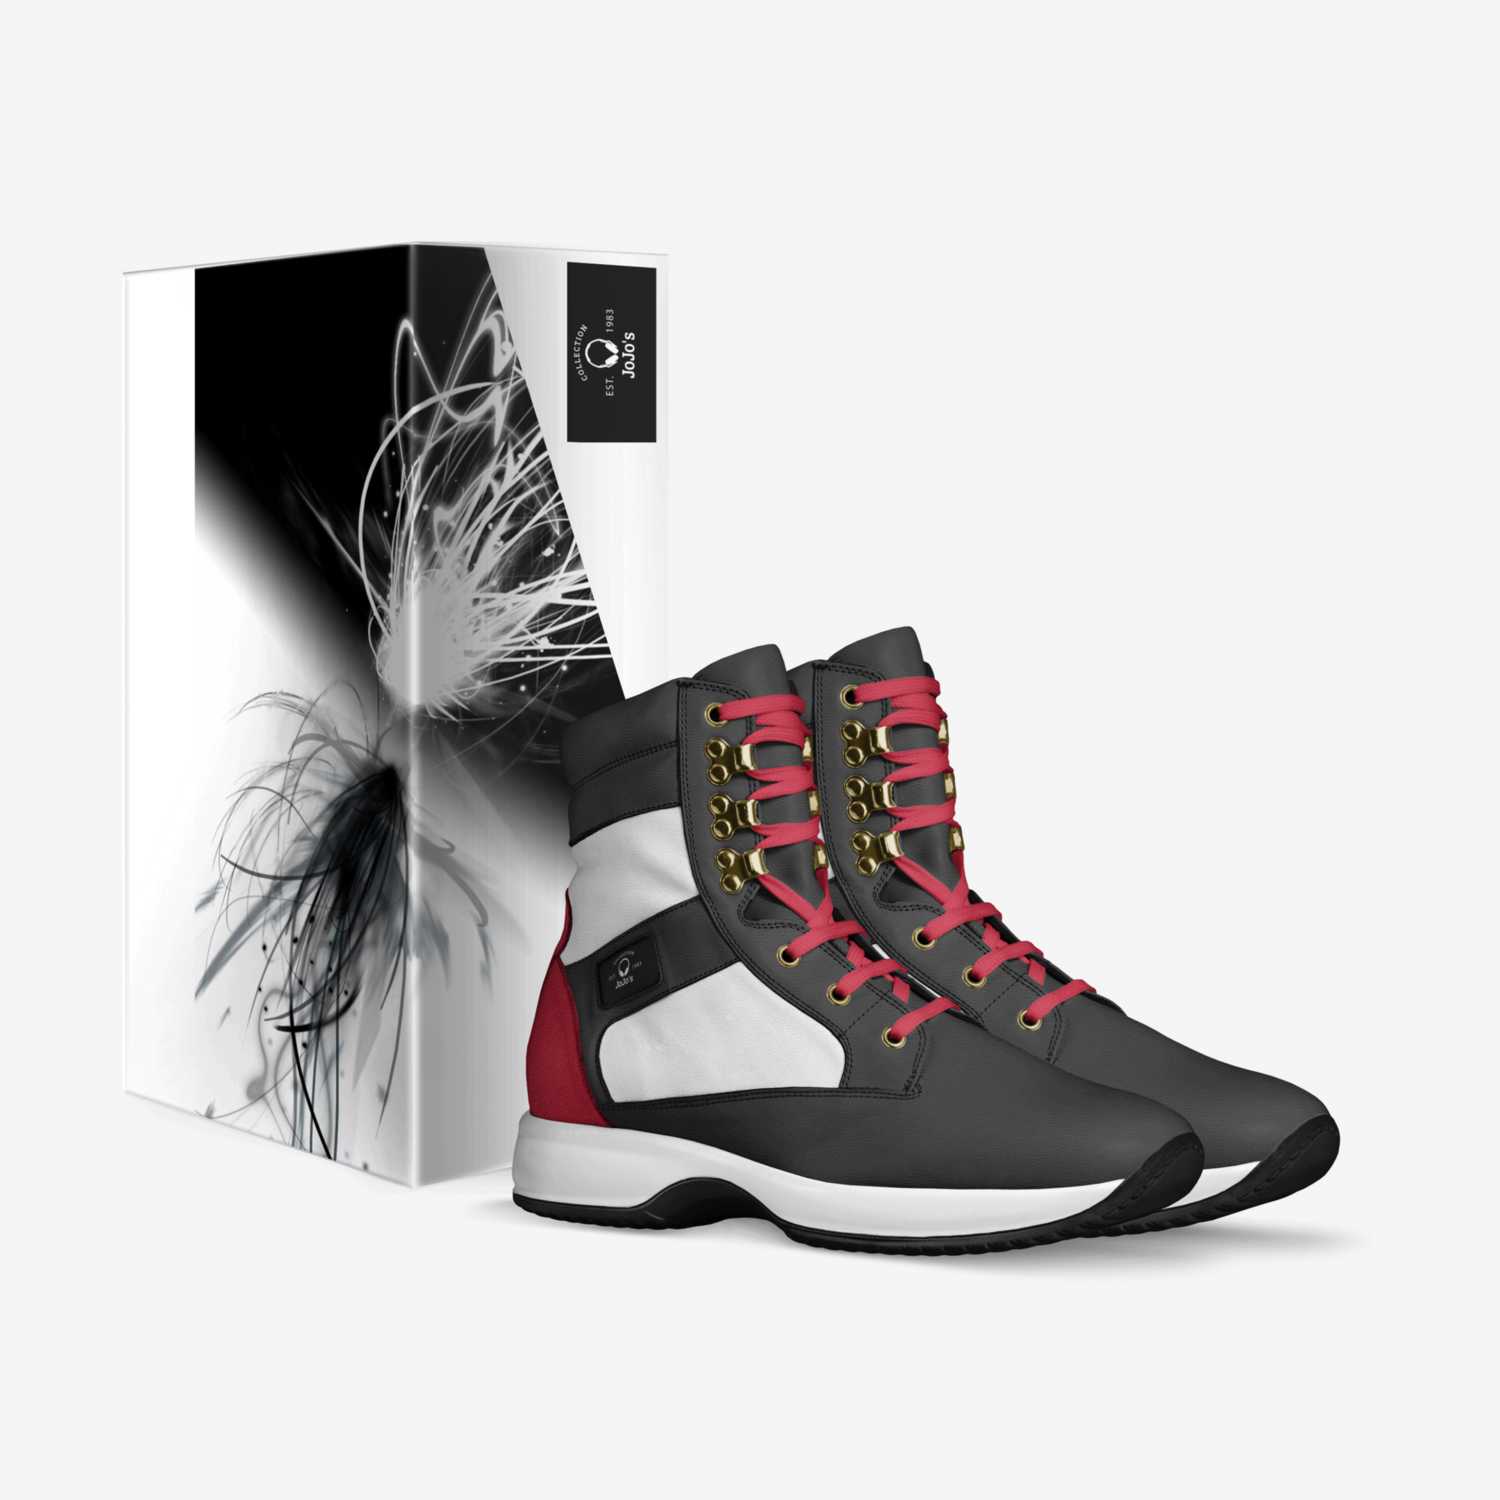 JoJo's custom made in Italy shoes by Joseph Barley | Box view